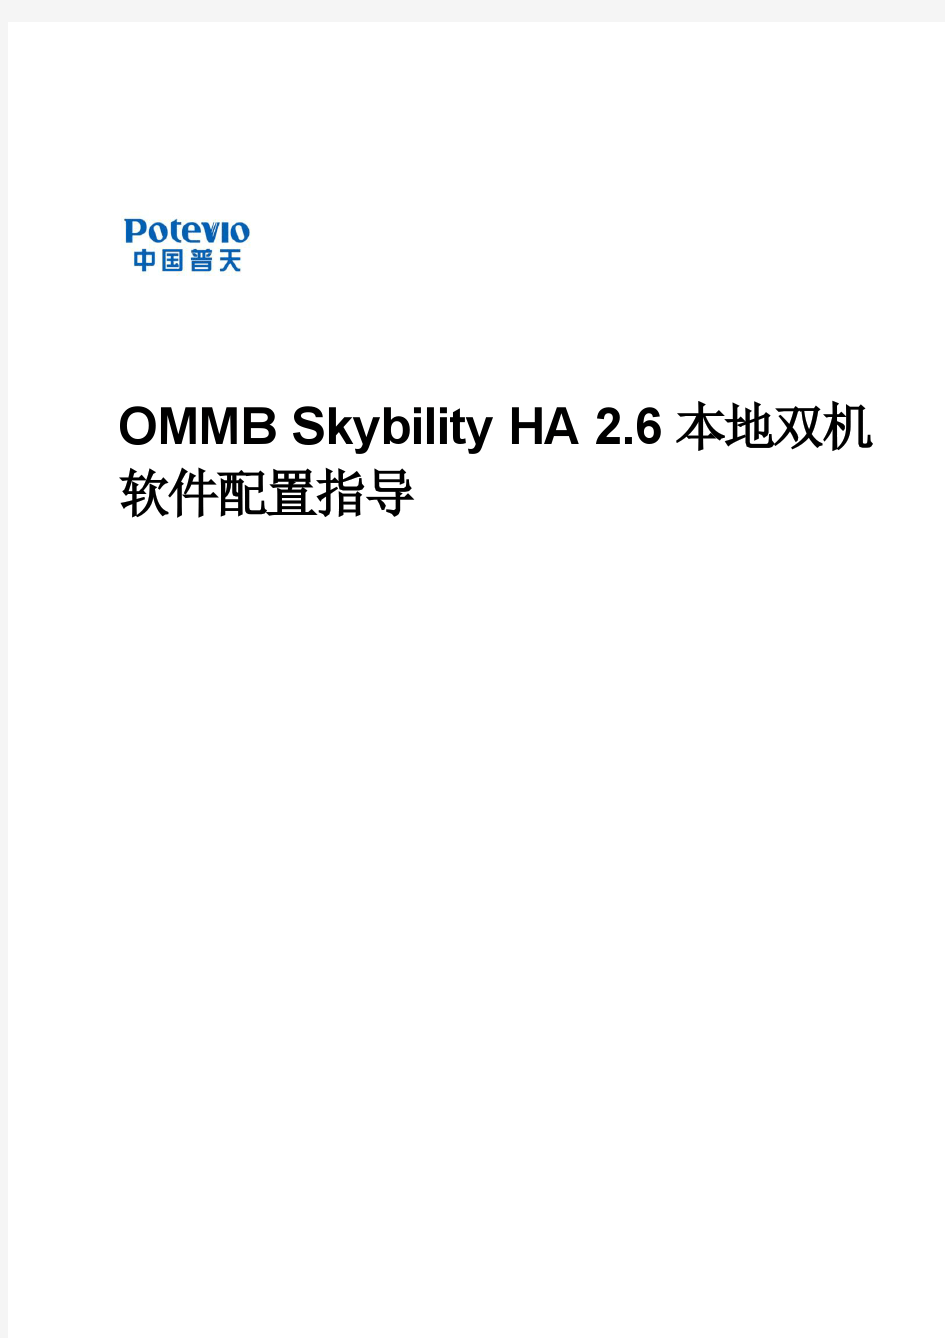 OMMB Skybility HA 2.6本地双机软件配置指导